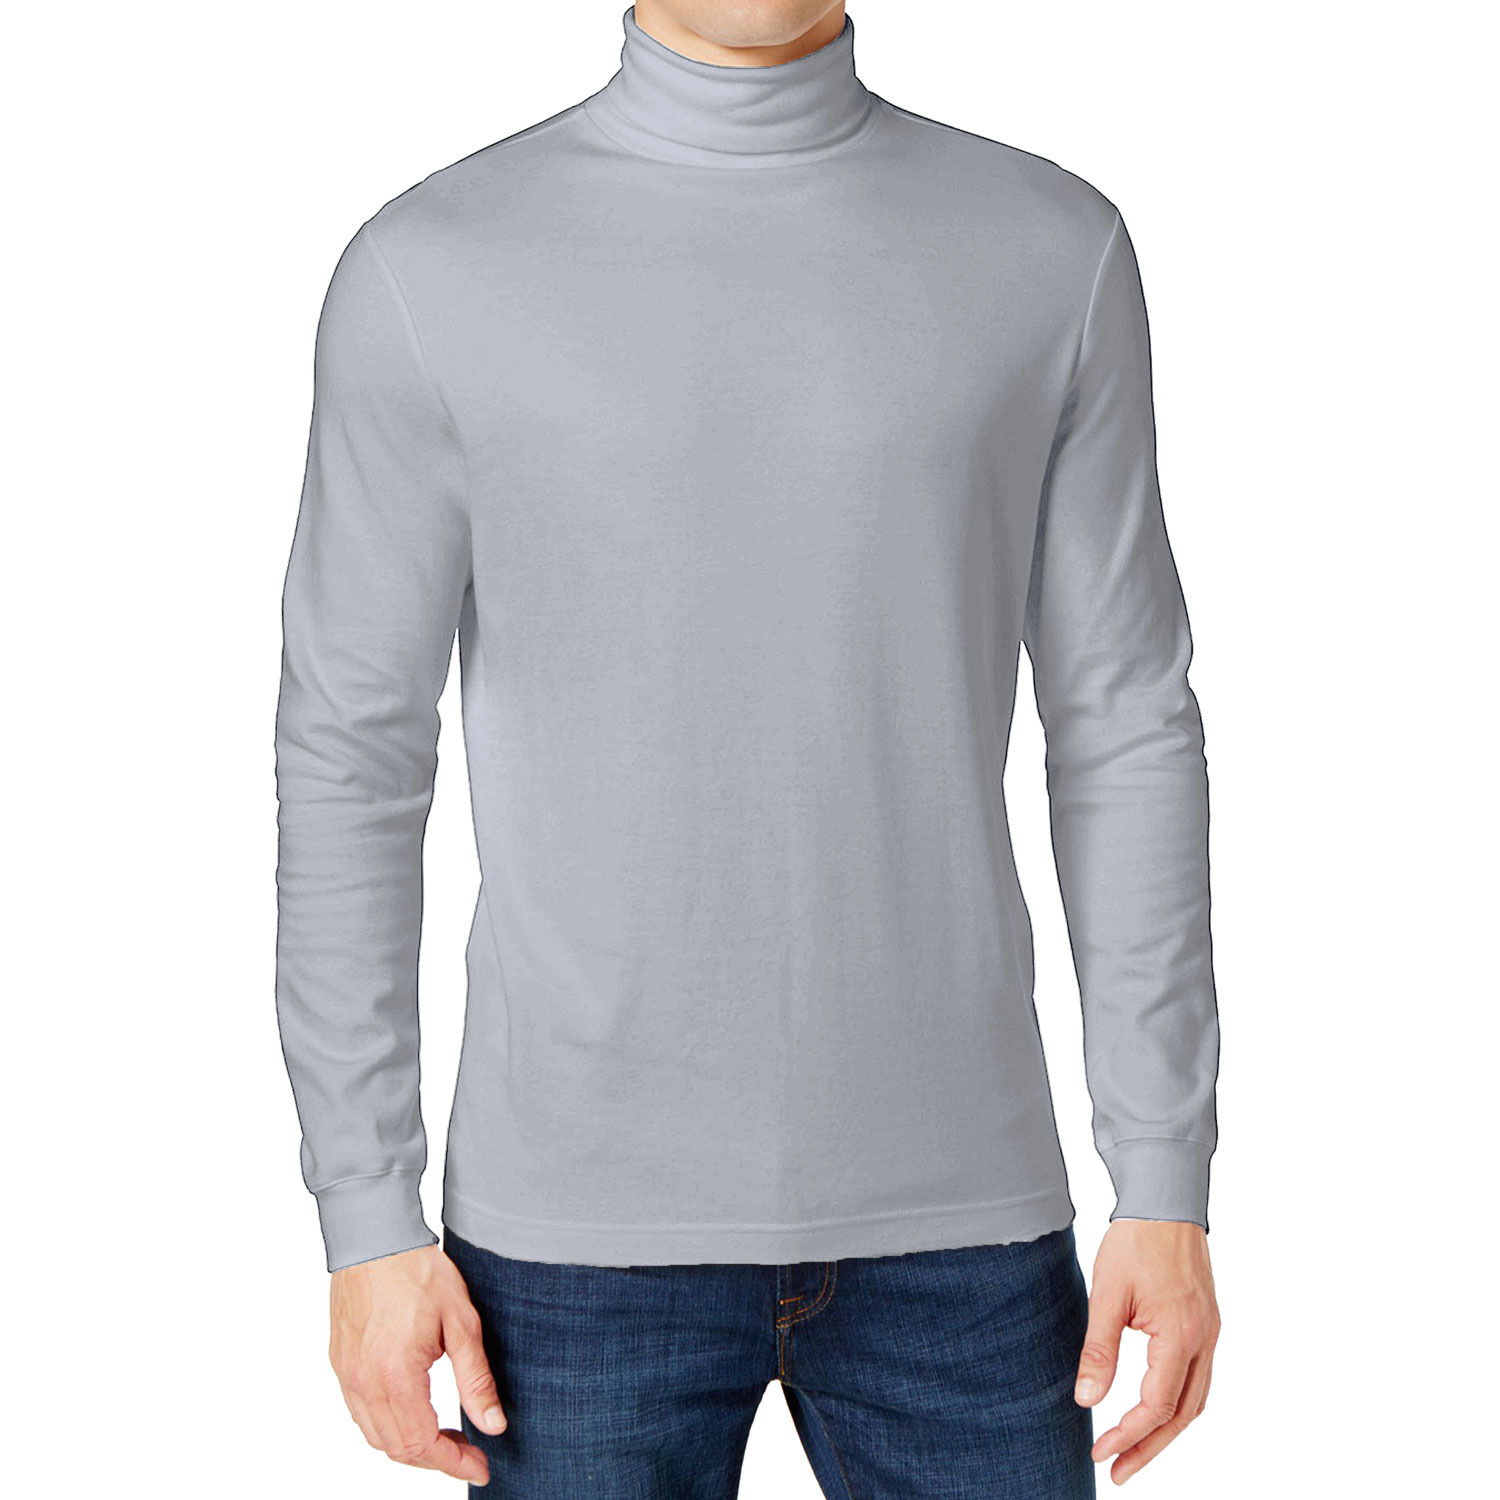 Men's Long Sleeve Turtle Neck T-Shirt